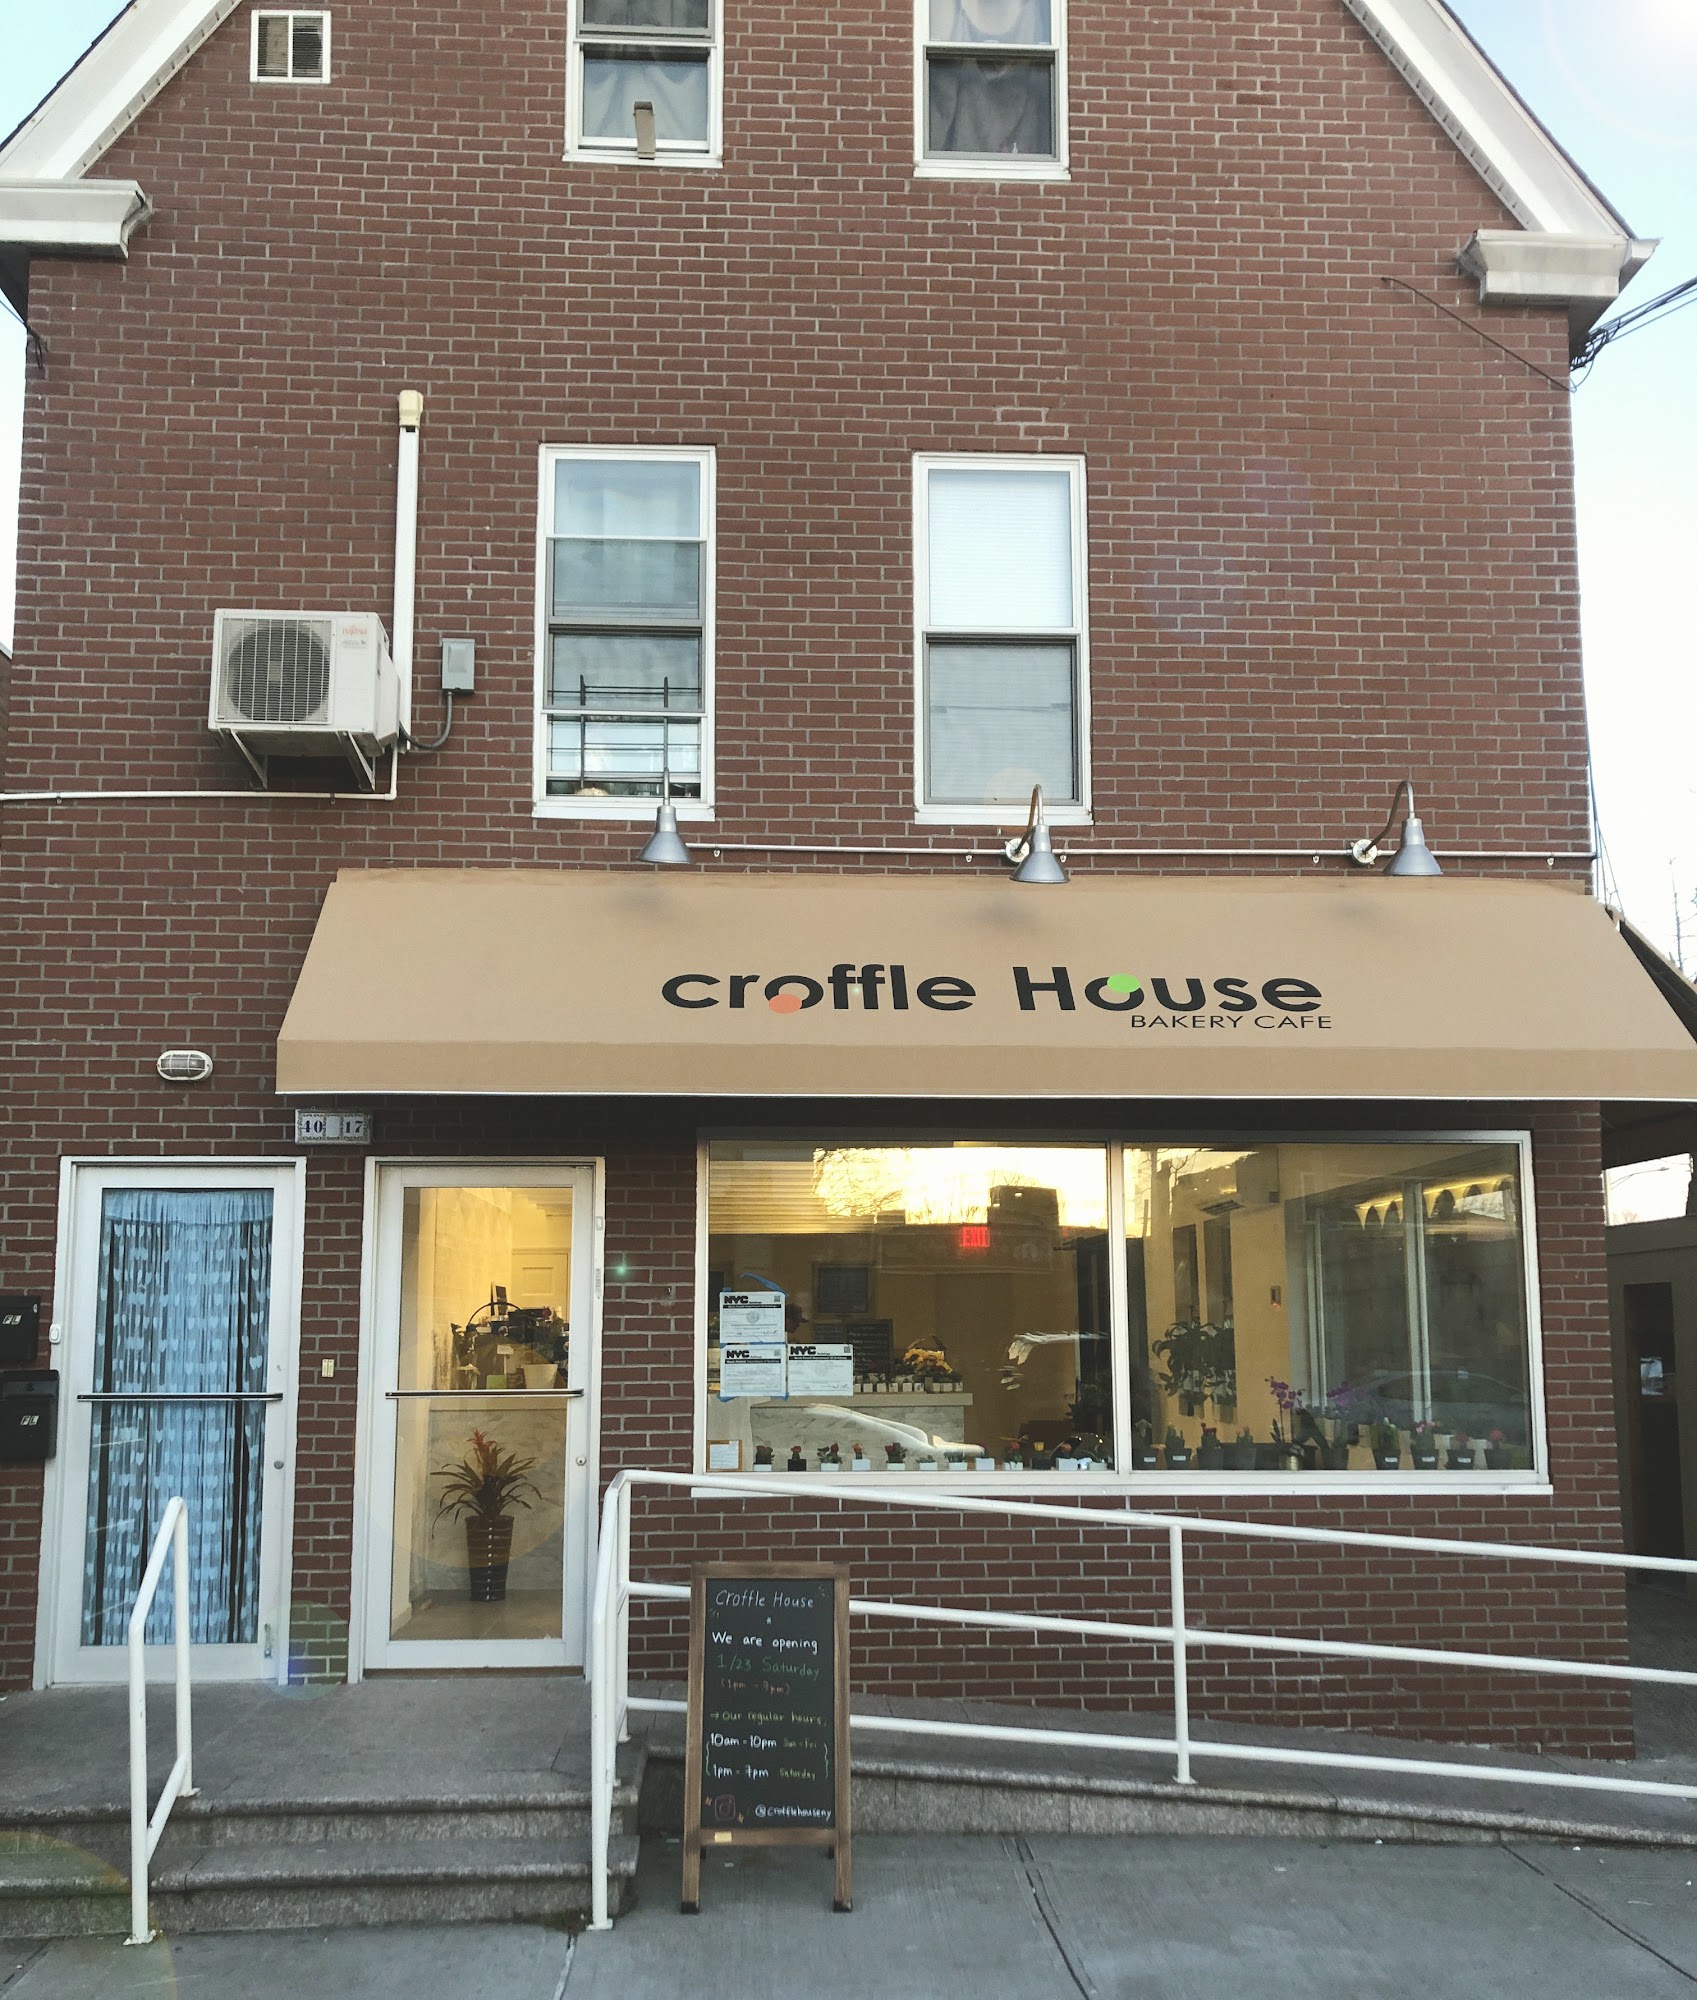 Croffle House